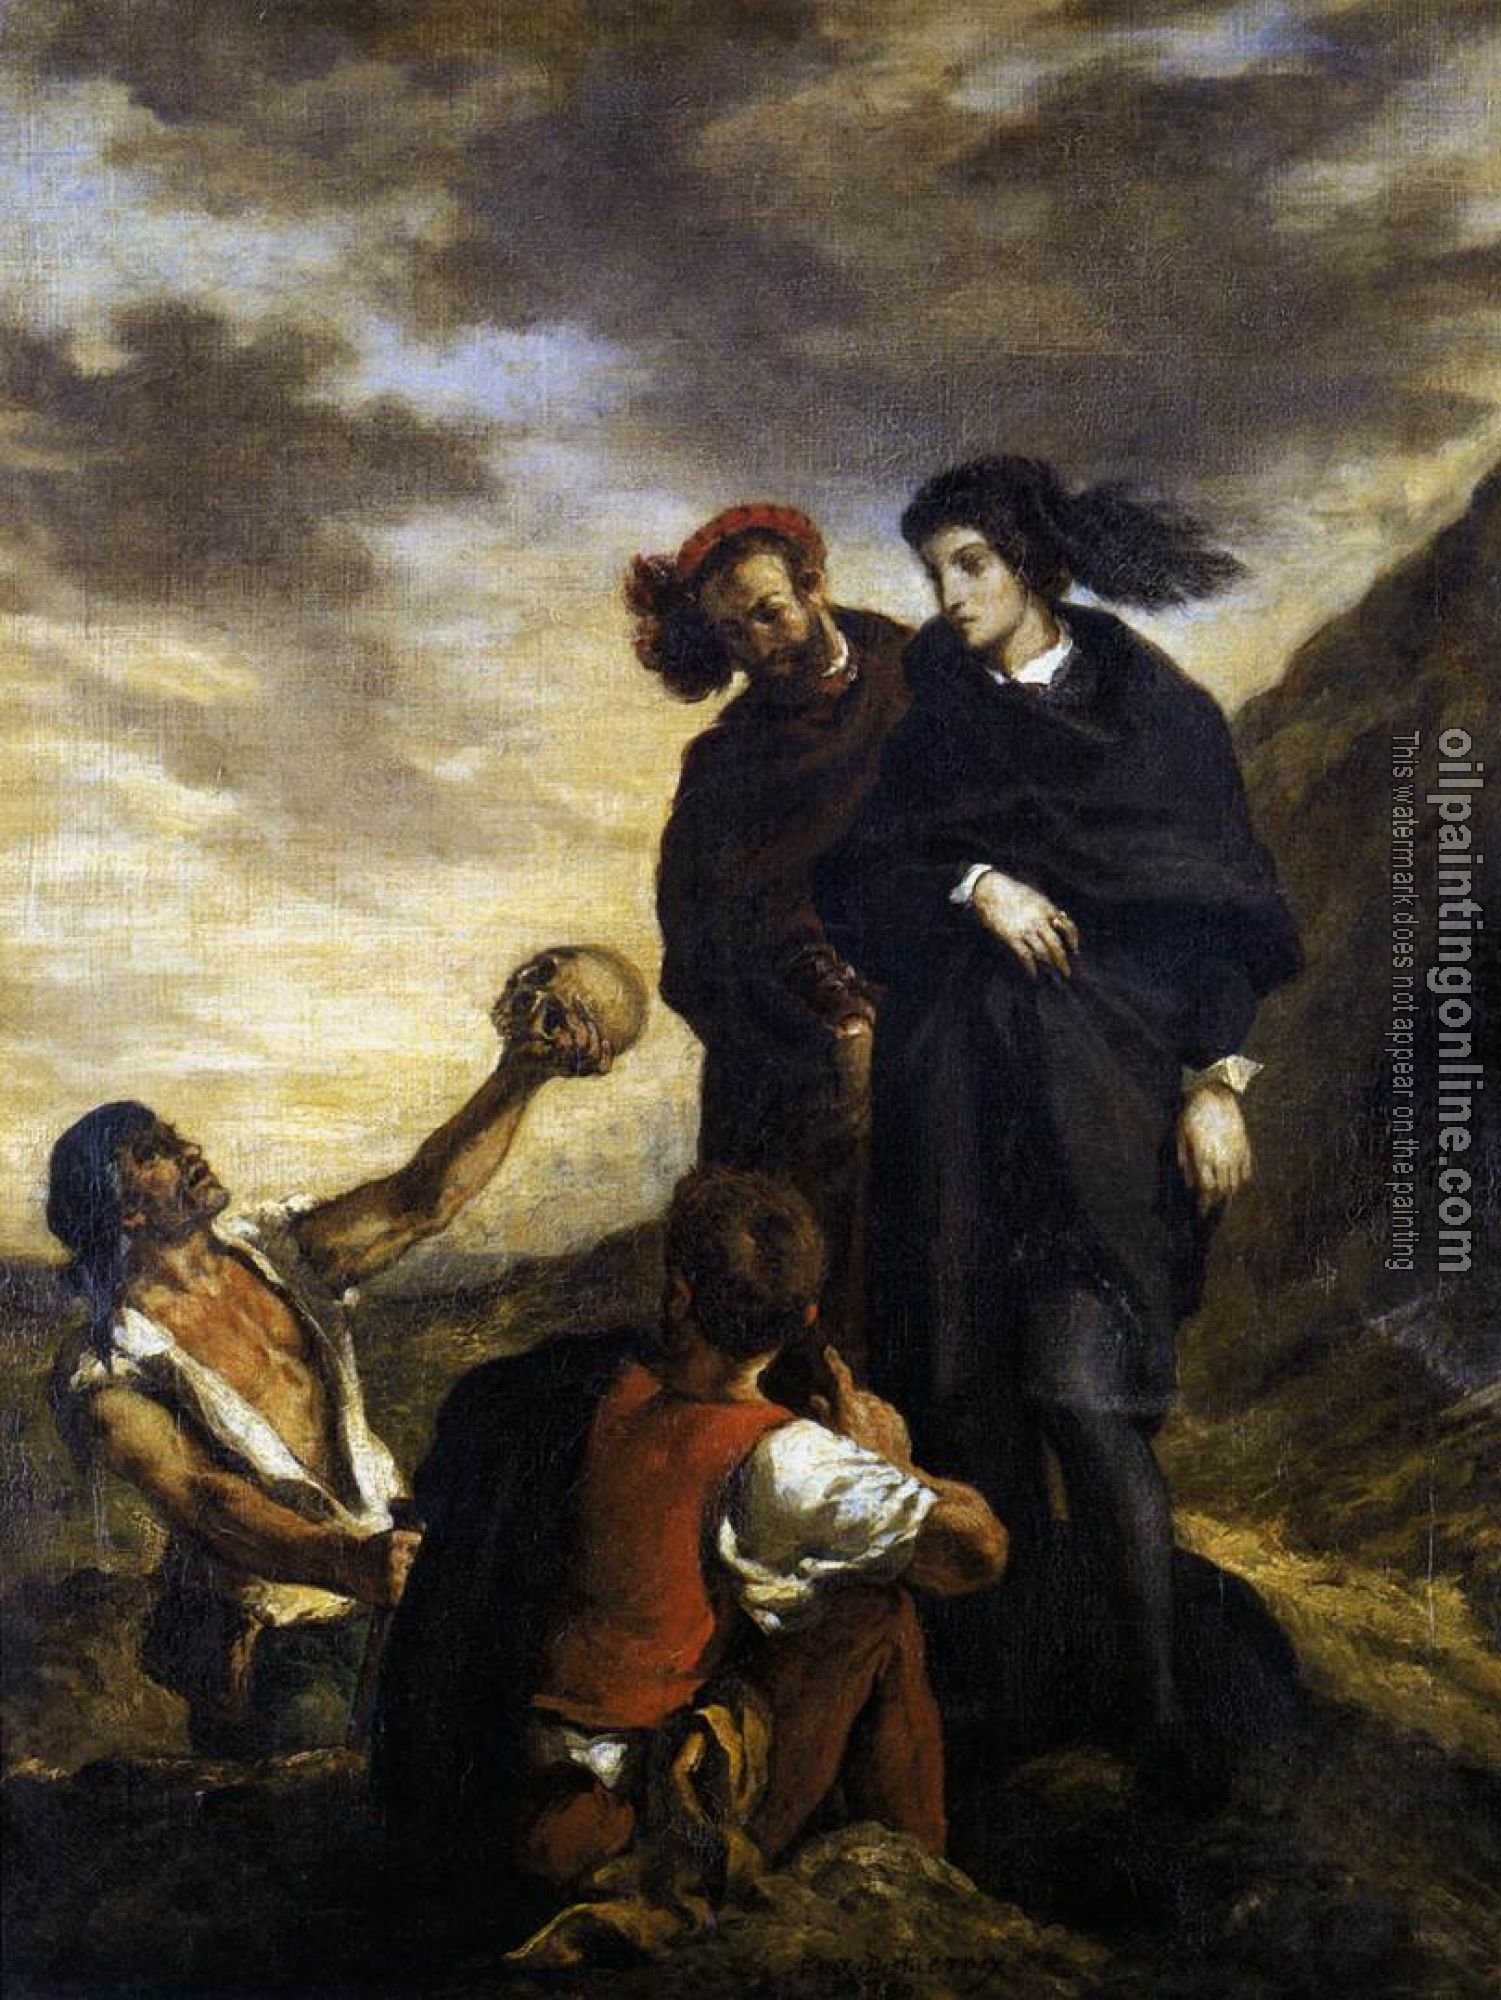 Delacroix, Eugene - Hamlet and Horatio in the Graveyard